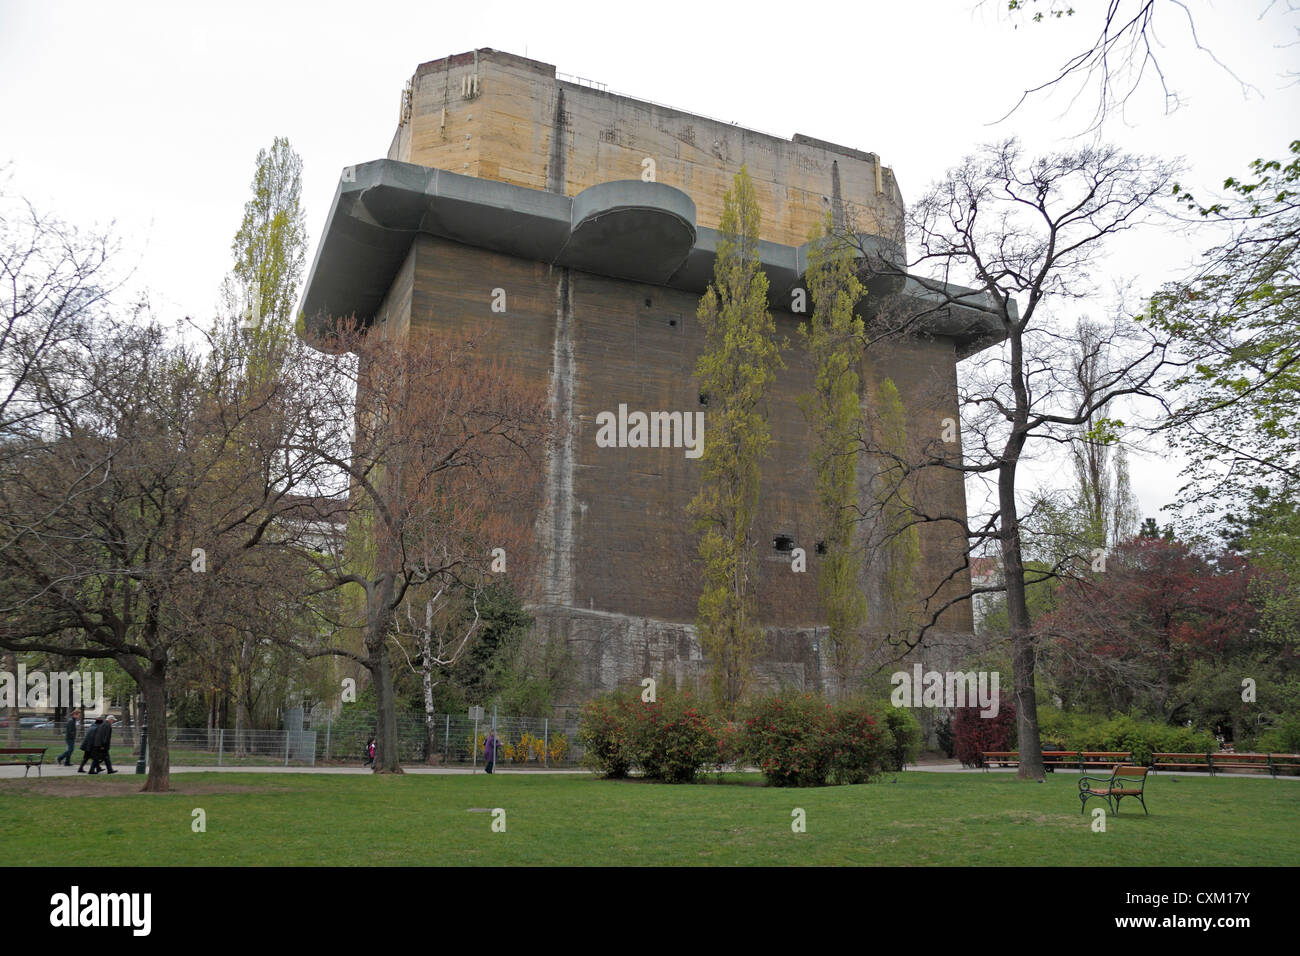 The L-Tower German World War Two anti-aircraft flak towers (flackturme) in Arenberg Park, Vienna, Austria. Stock Photo